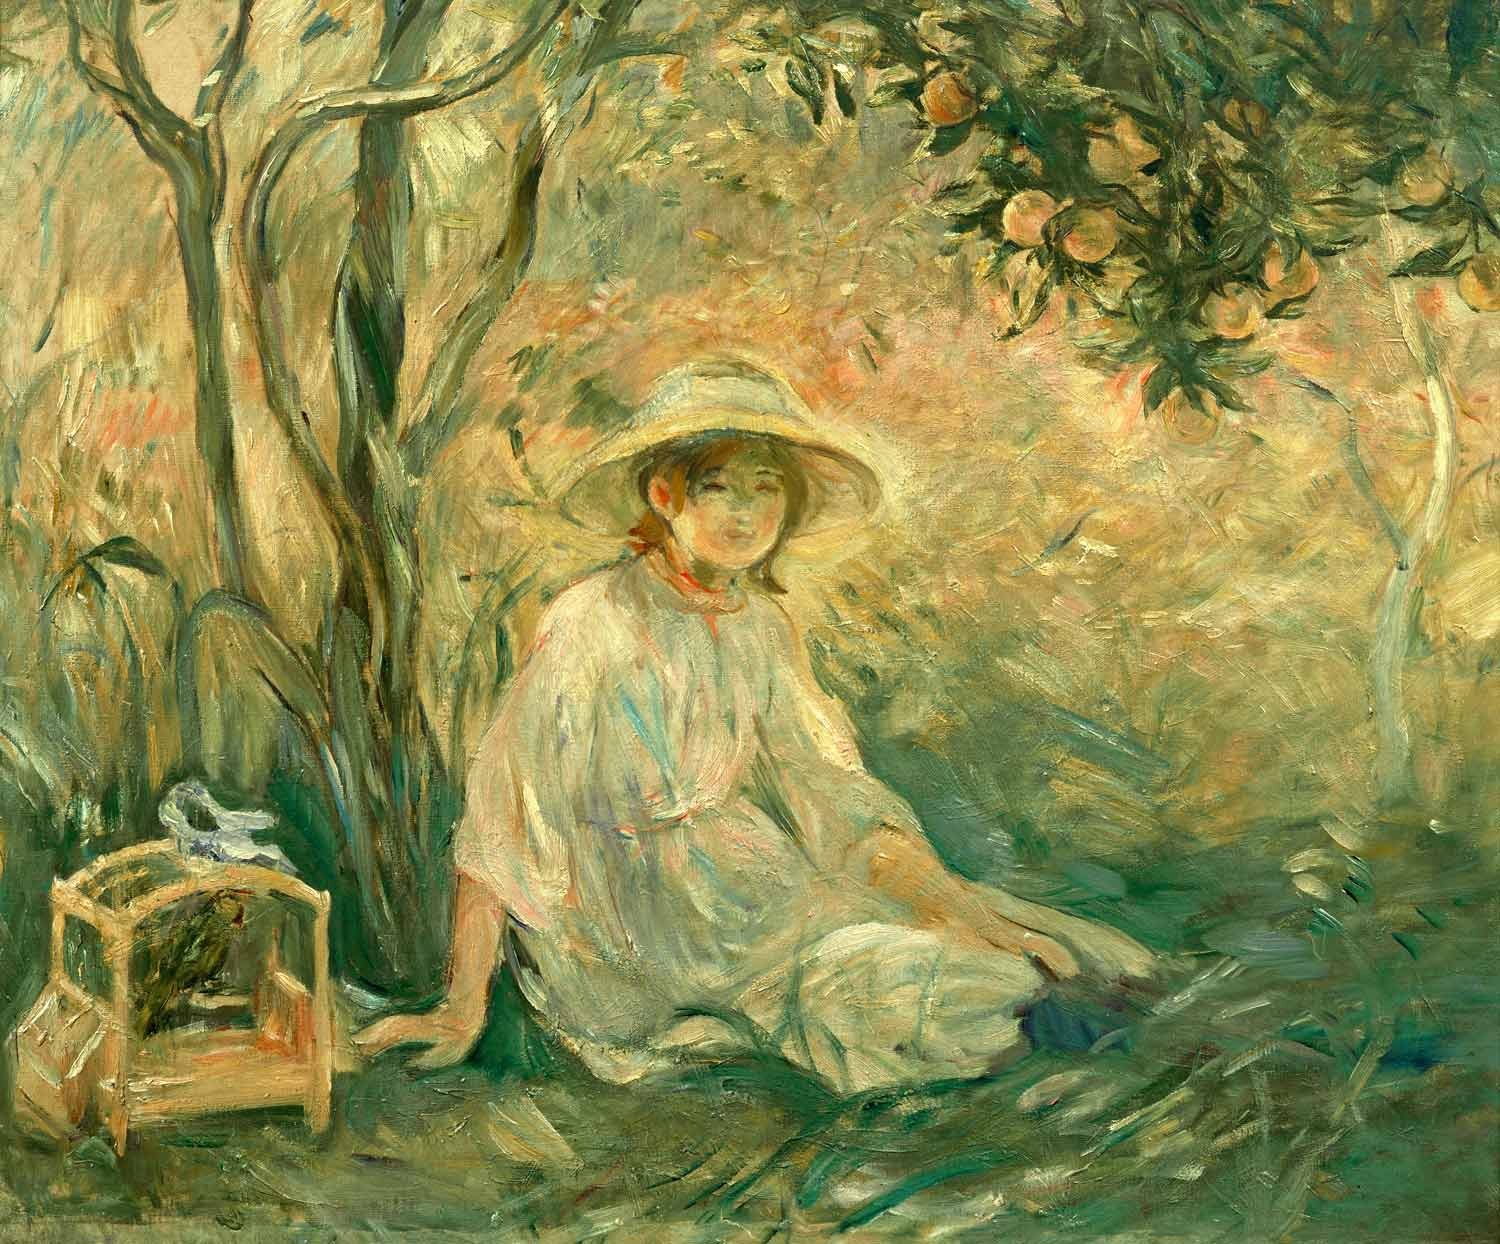 Under the Orange Tree by Berthe Morisot - 1889 - 73.03 x 84.77 cm Nelson-Atkins Museum of Art